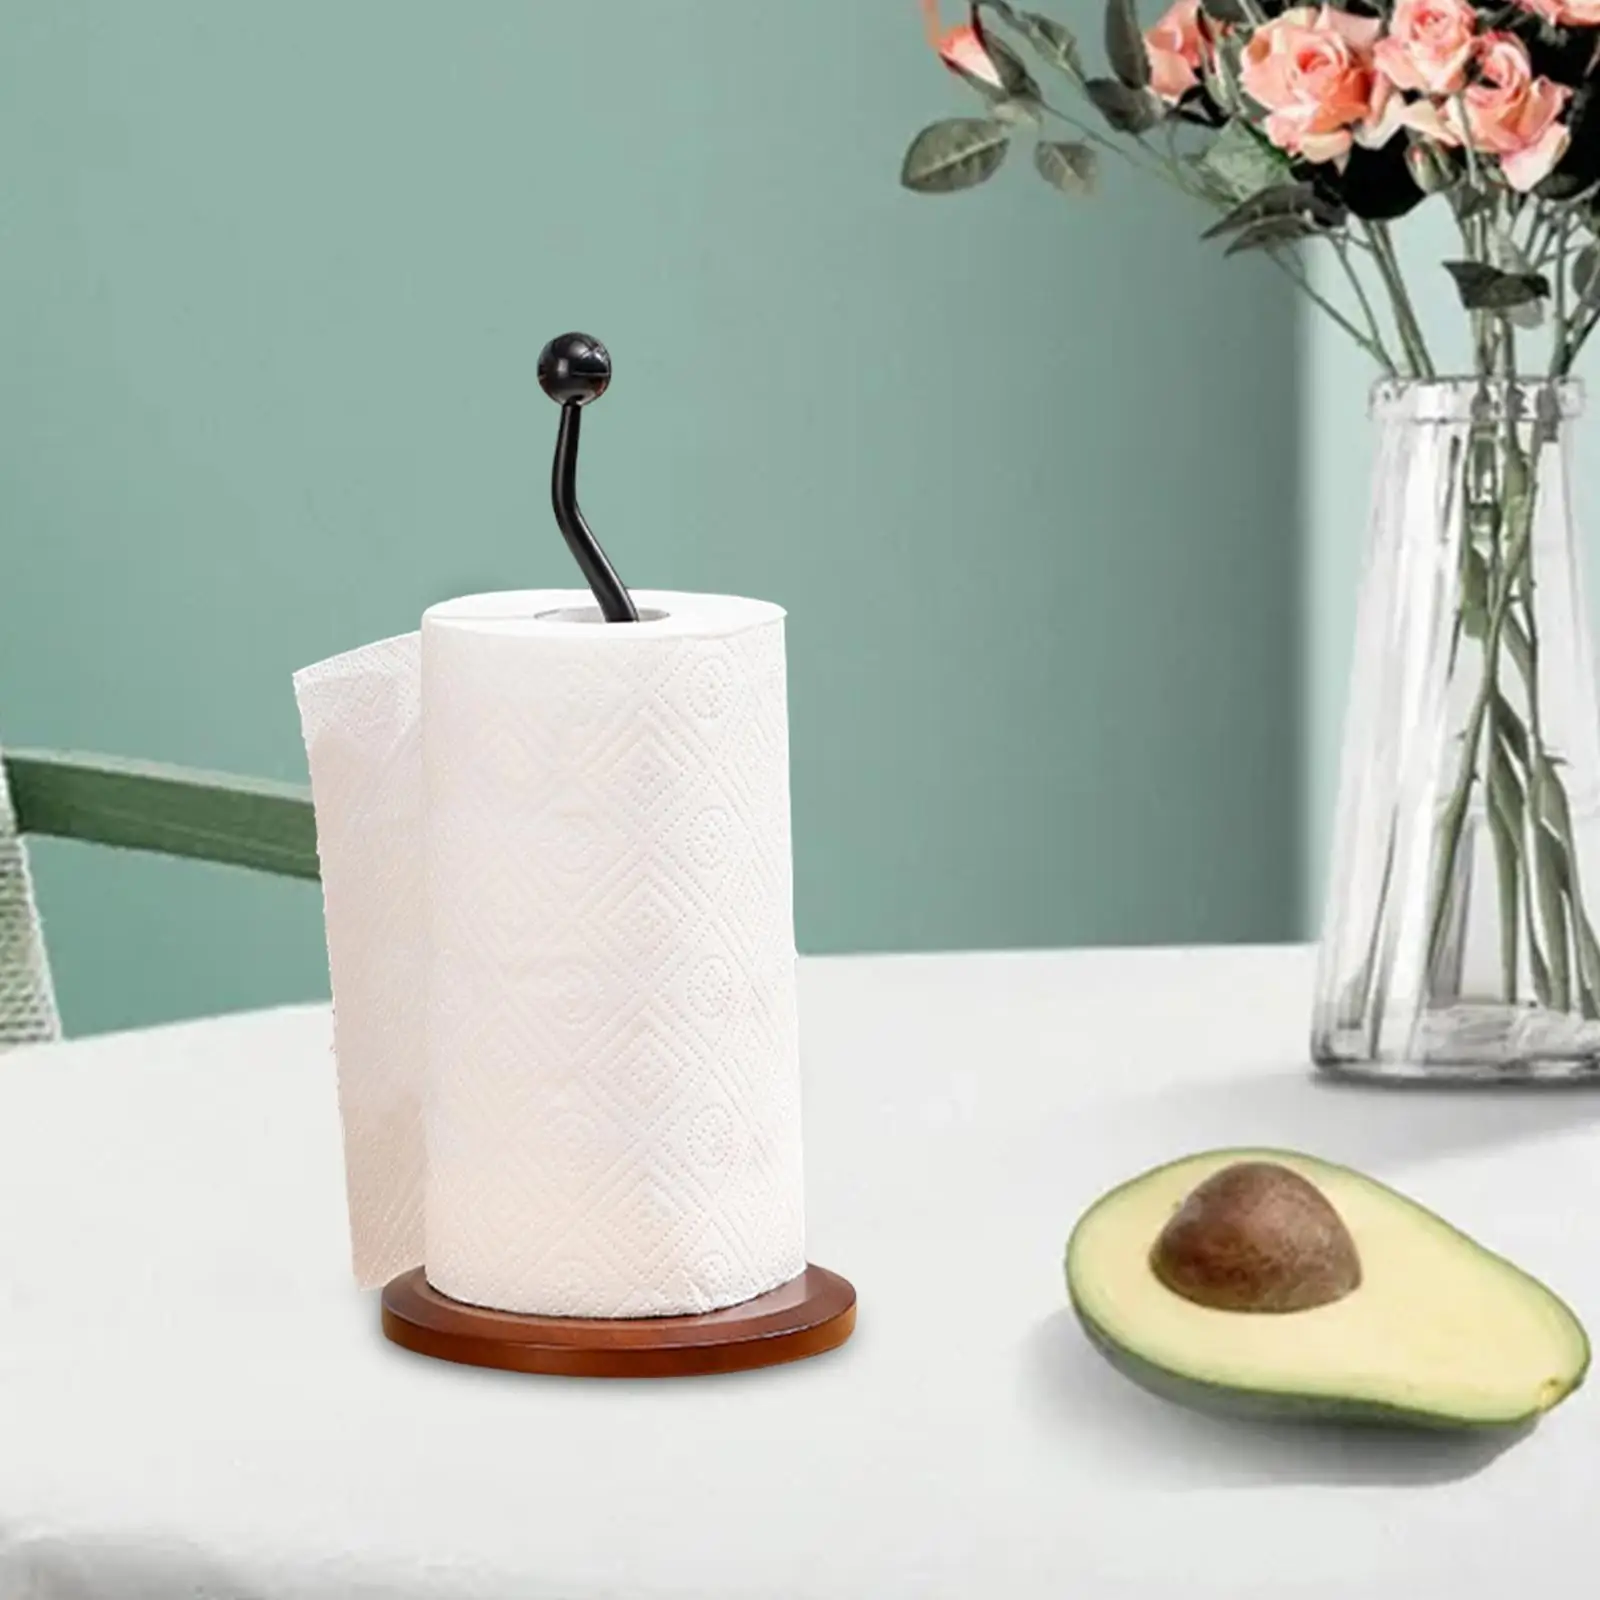 Kitchen Roll Paper Towel Holder Bathroom Tissue Stand for Hotel Toilet Washroom Restroom Bathroom